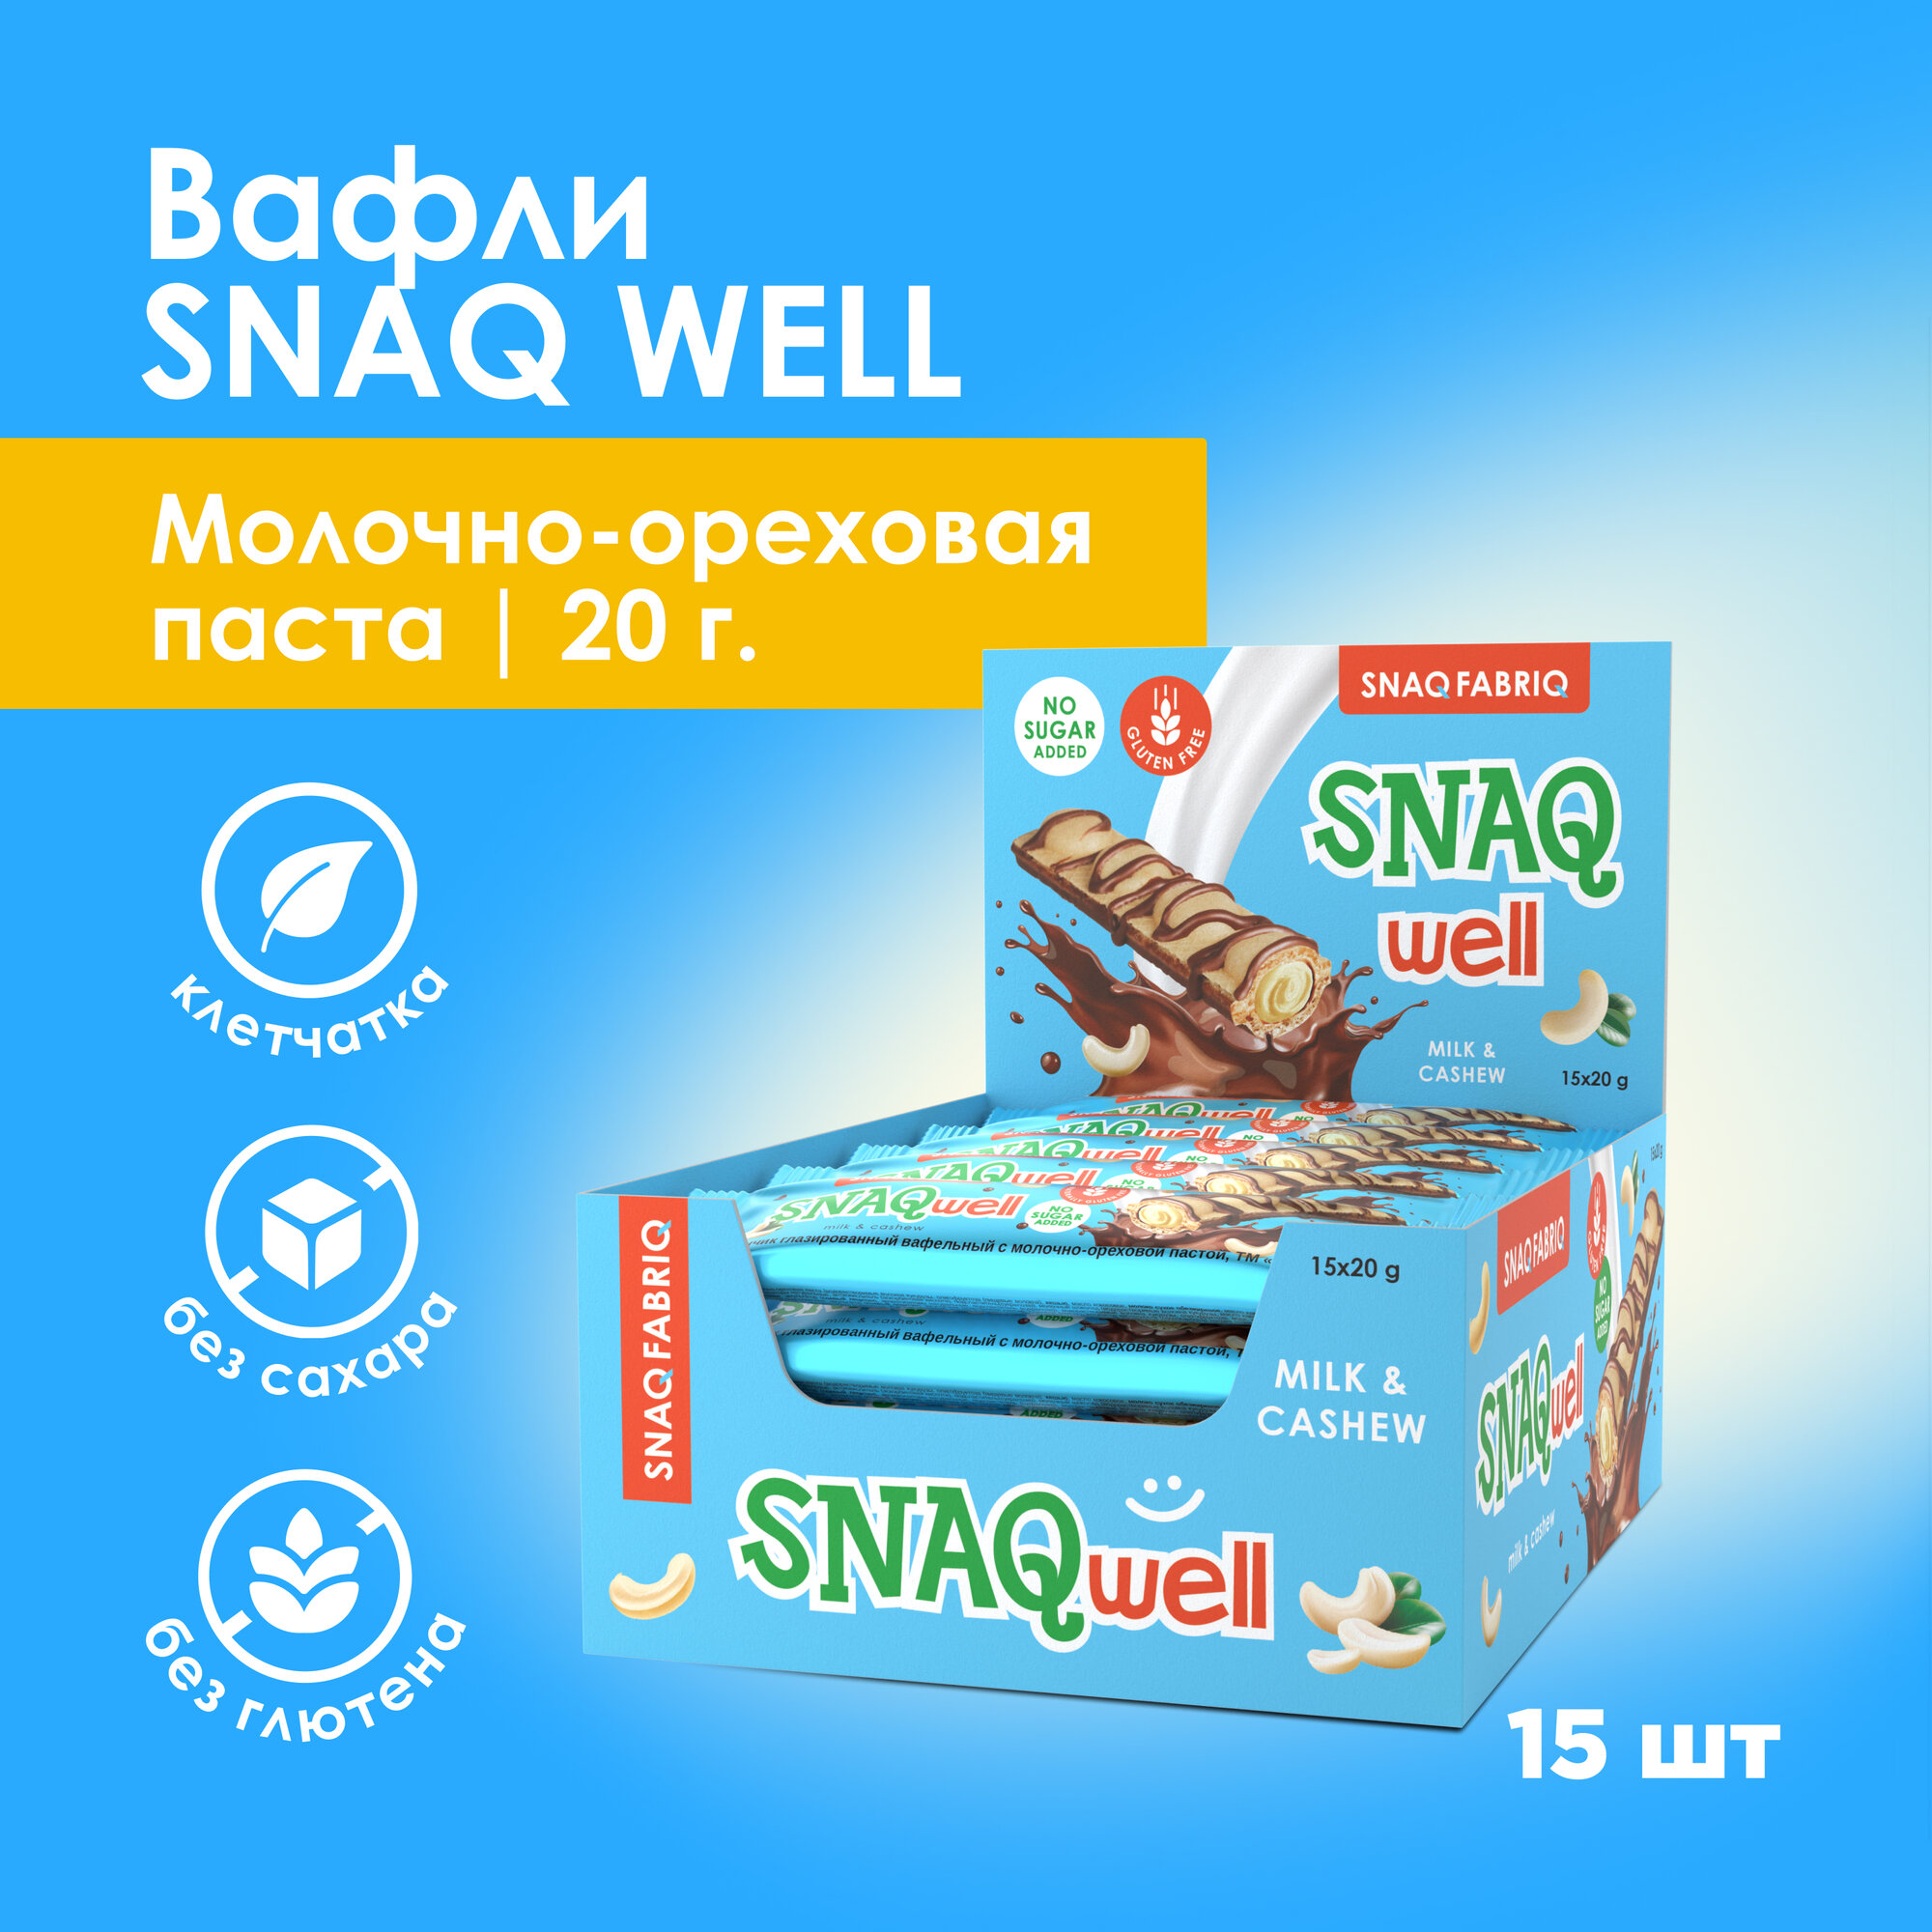 Шоколадные батончики Snaq Fabriq Snaq-well - вафли без сахара, без глютена, 15шт х 20г